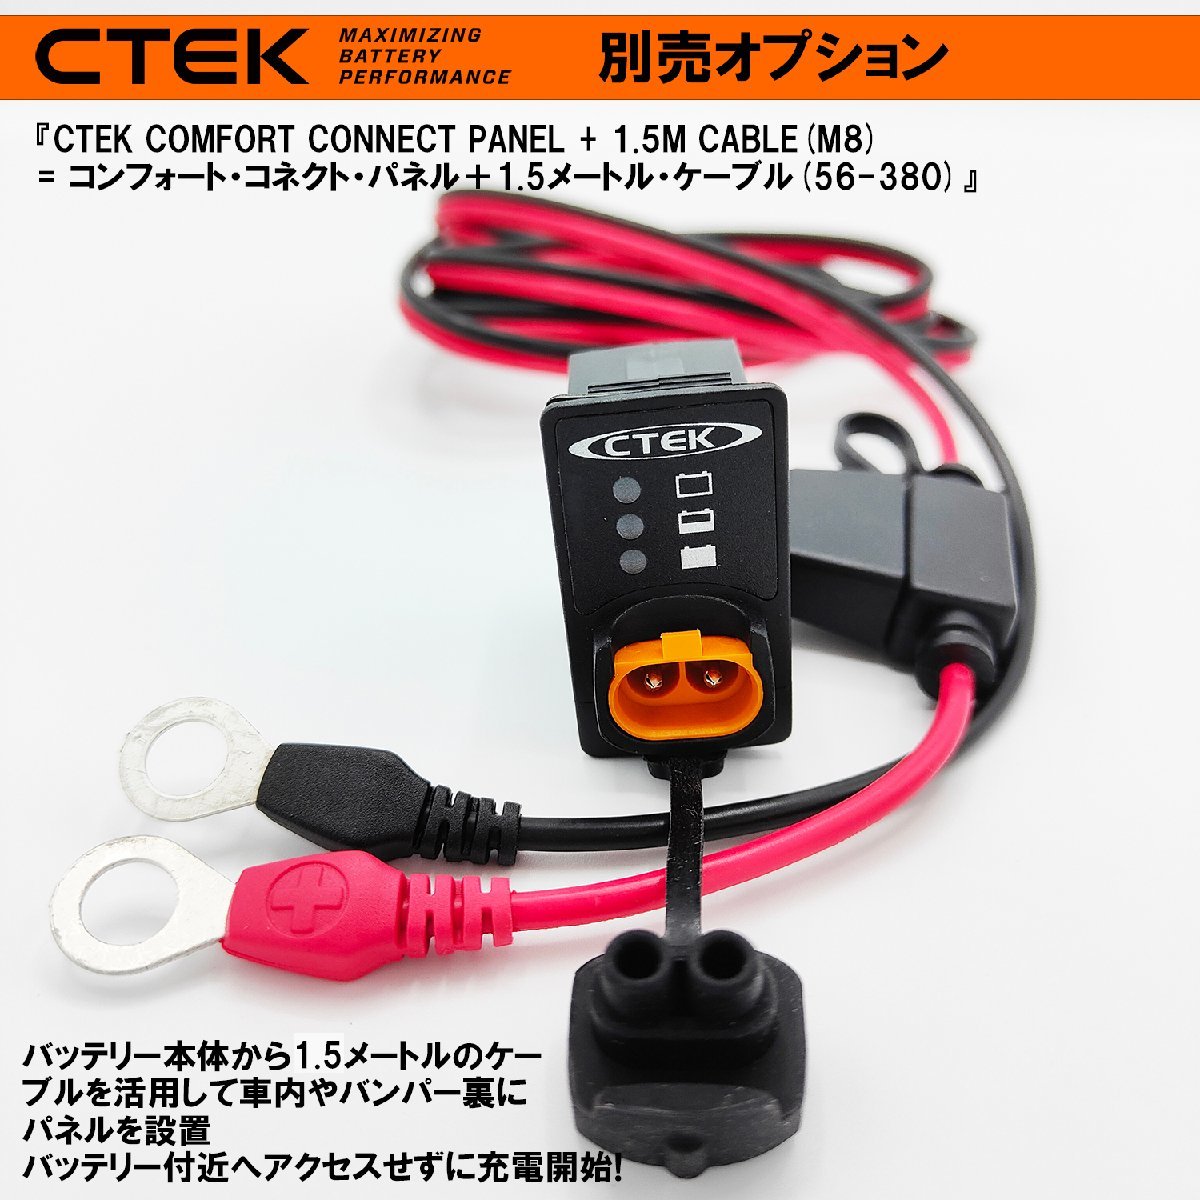 CTEK комфорт * индикатор * panel (1.5M) - 56-380si- Tec BMW 61432289105 включая доставку 